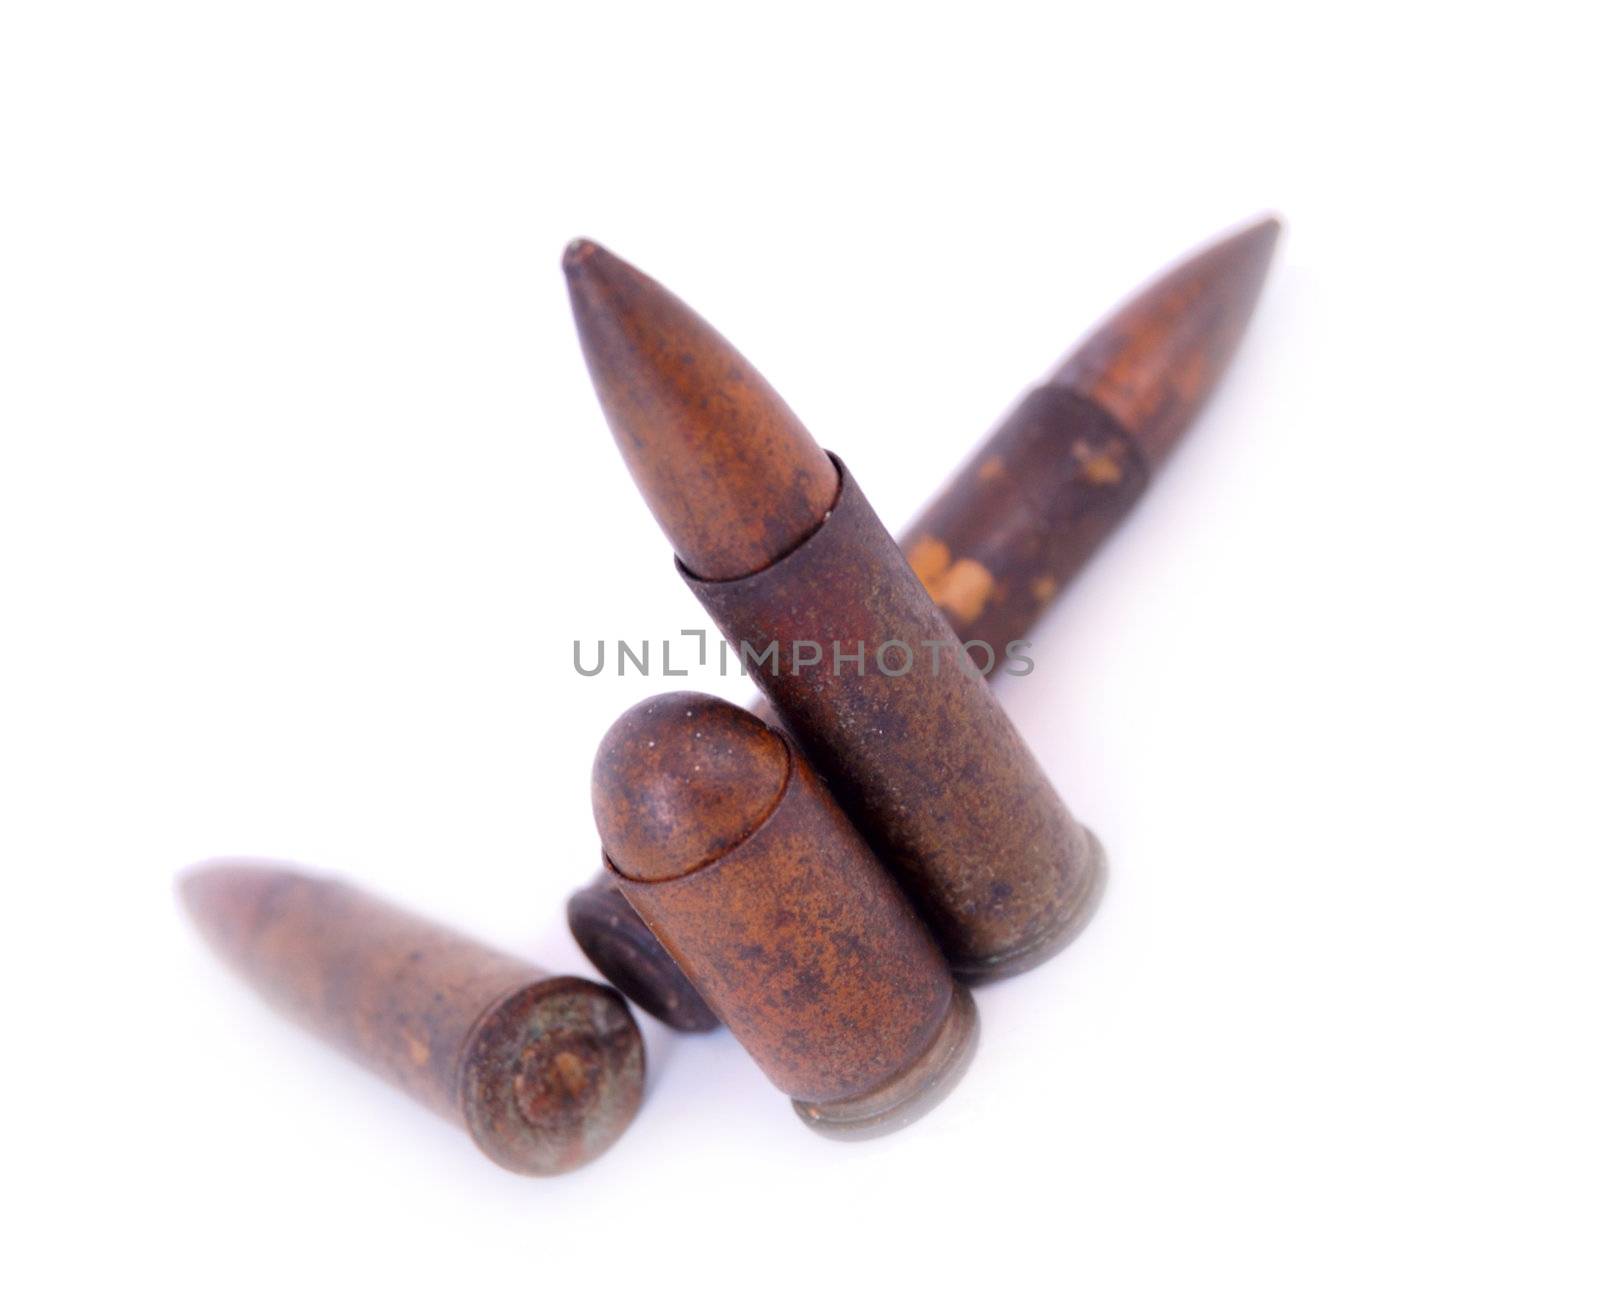 set of old used shells (cartriges) of World War I